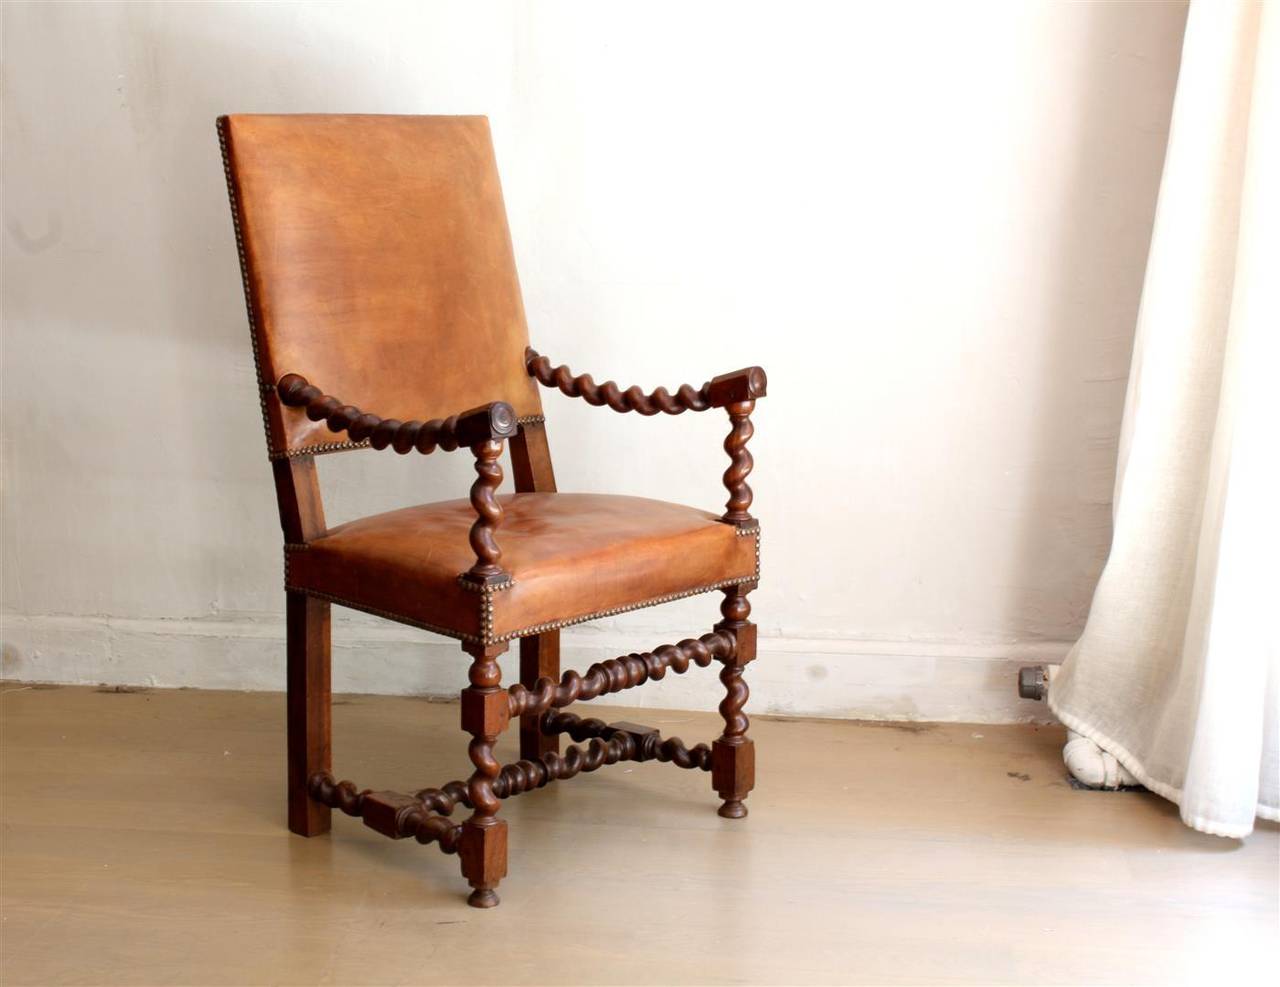 DETAILS
- French walnut barley twist armchair
- Vintage leather
- Nail heads

ORIGIN
- France, 19th century
